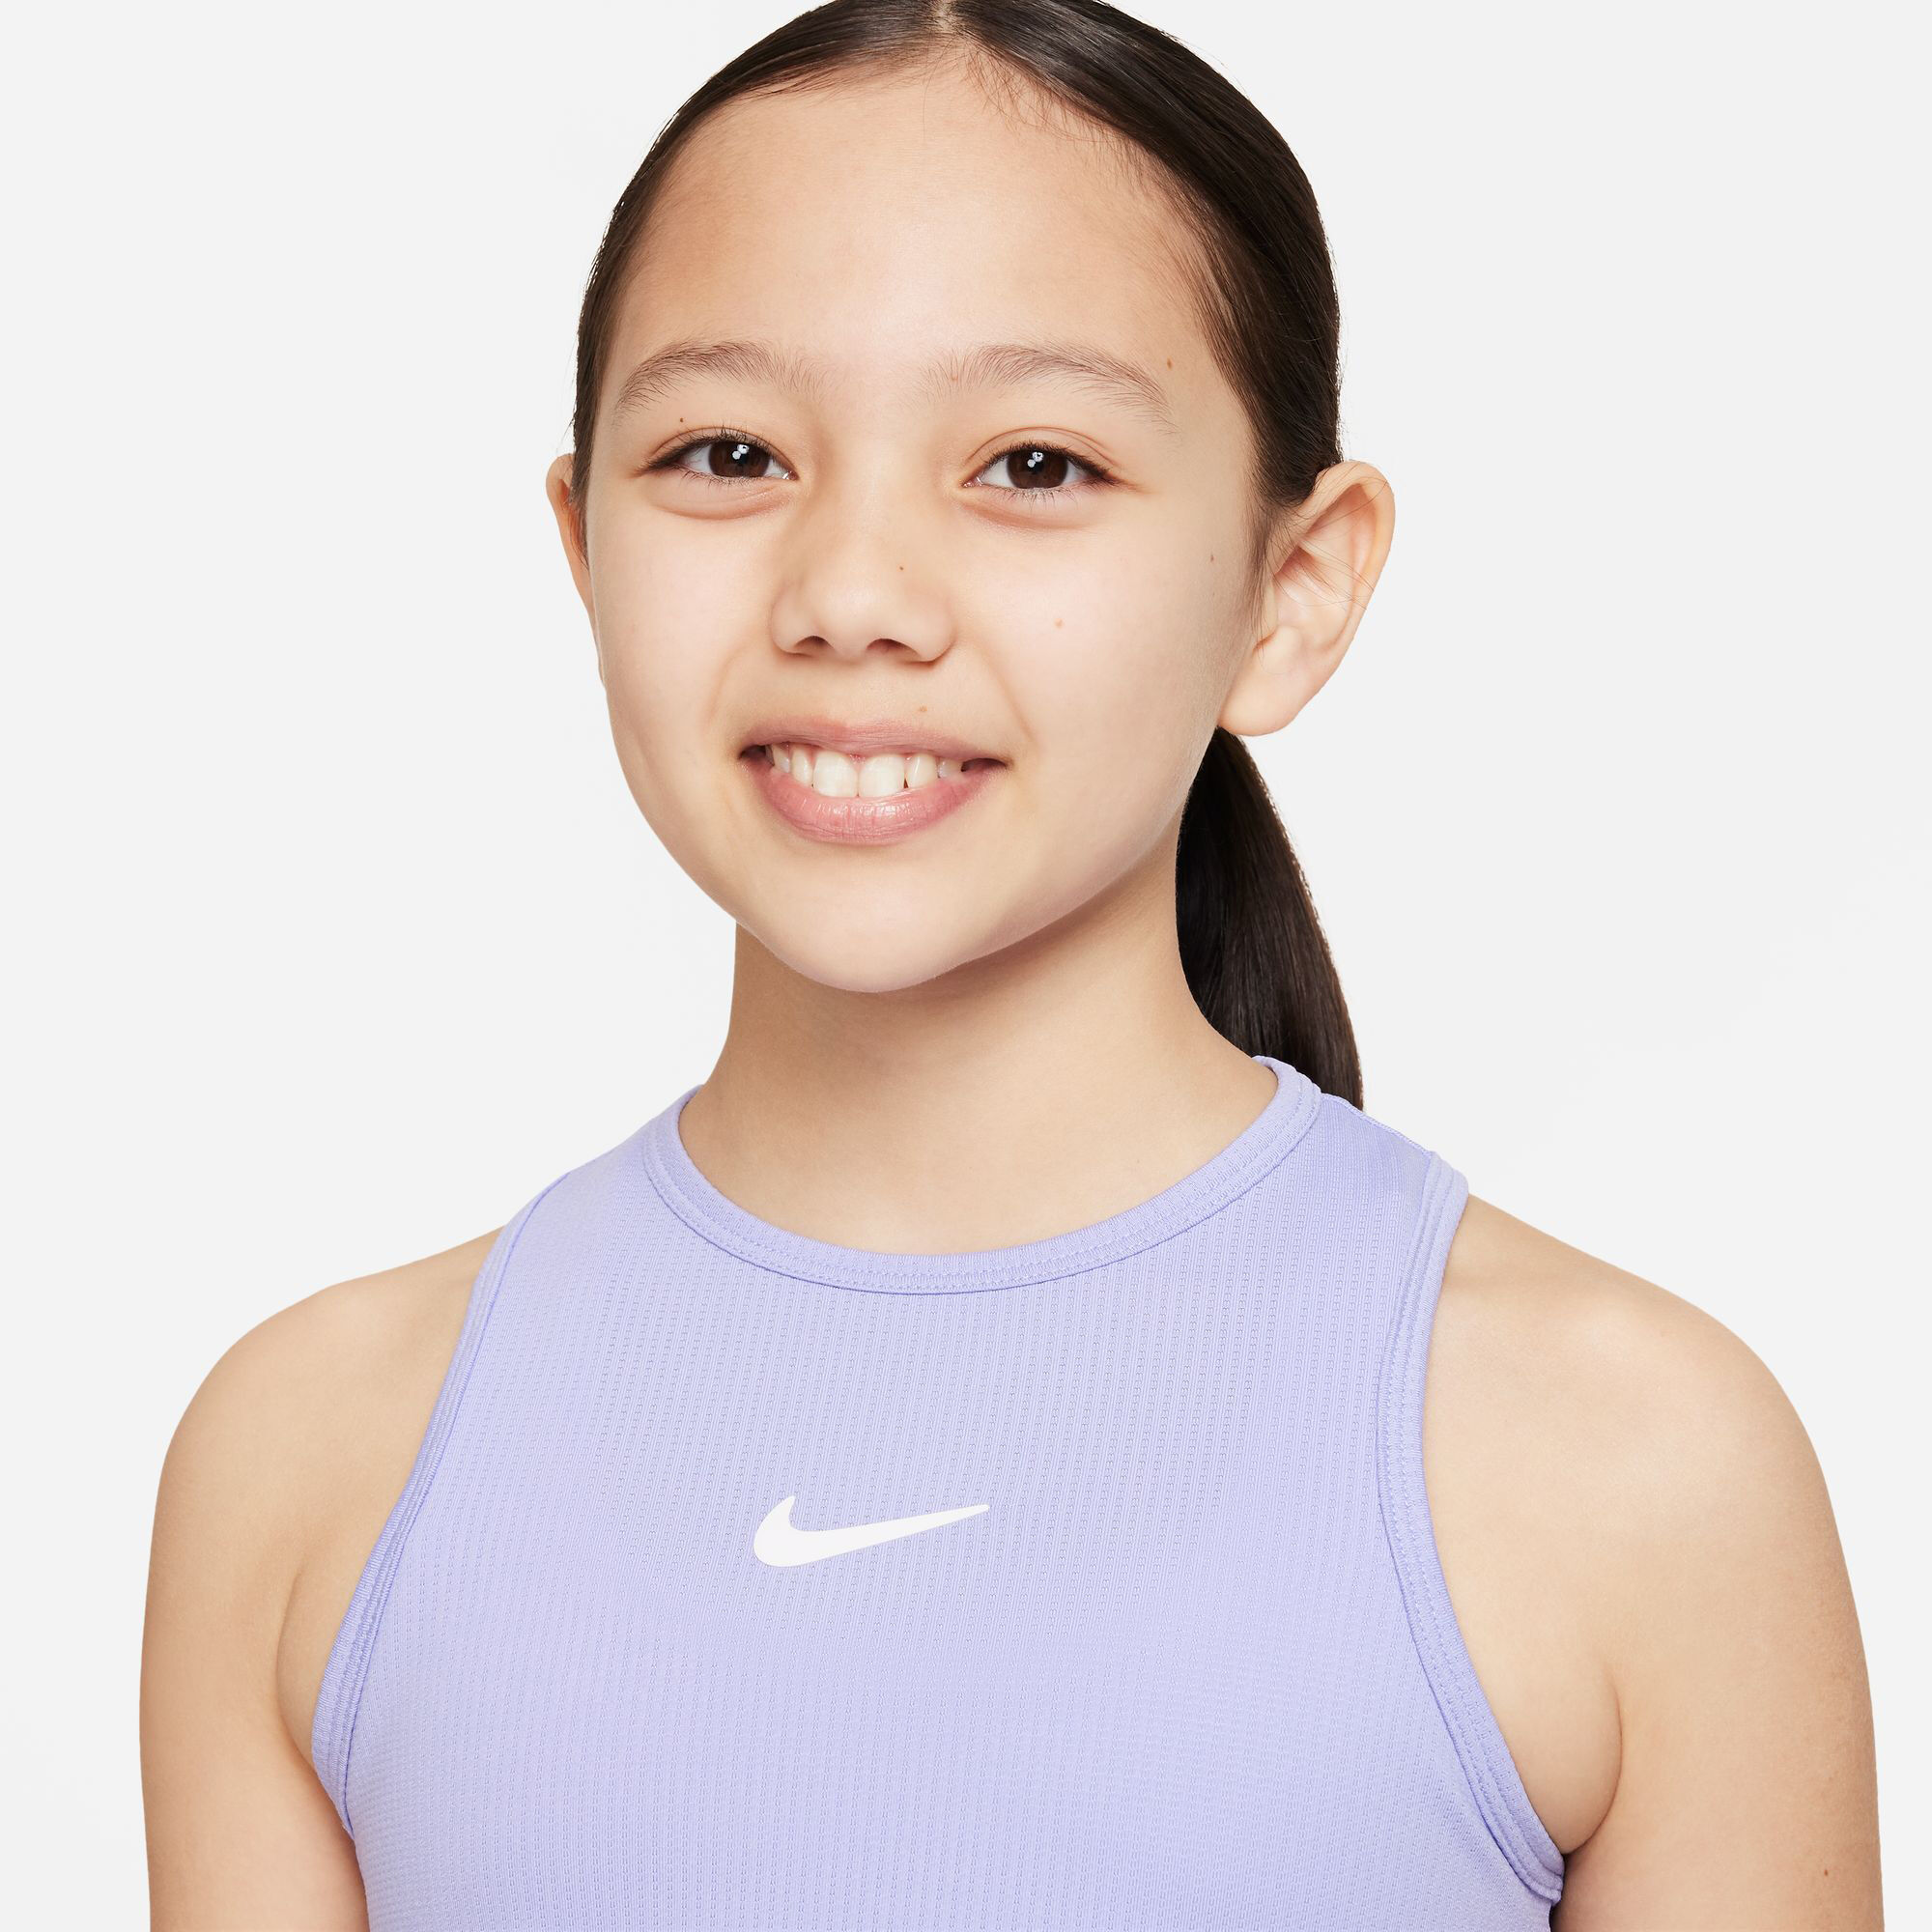 buy Nike Dri-Fit Victory Tank Top Girls - Lilac online | Tennis-Point